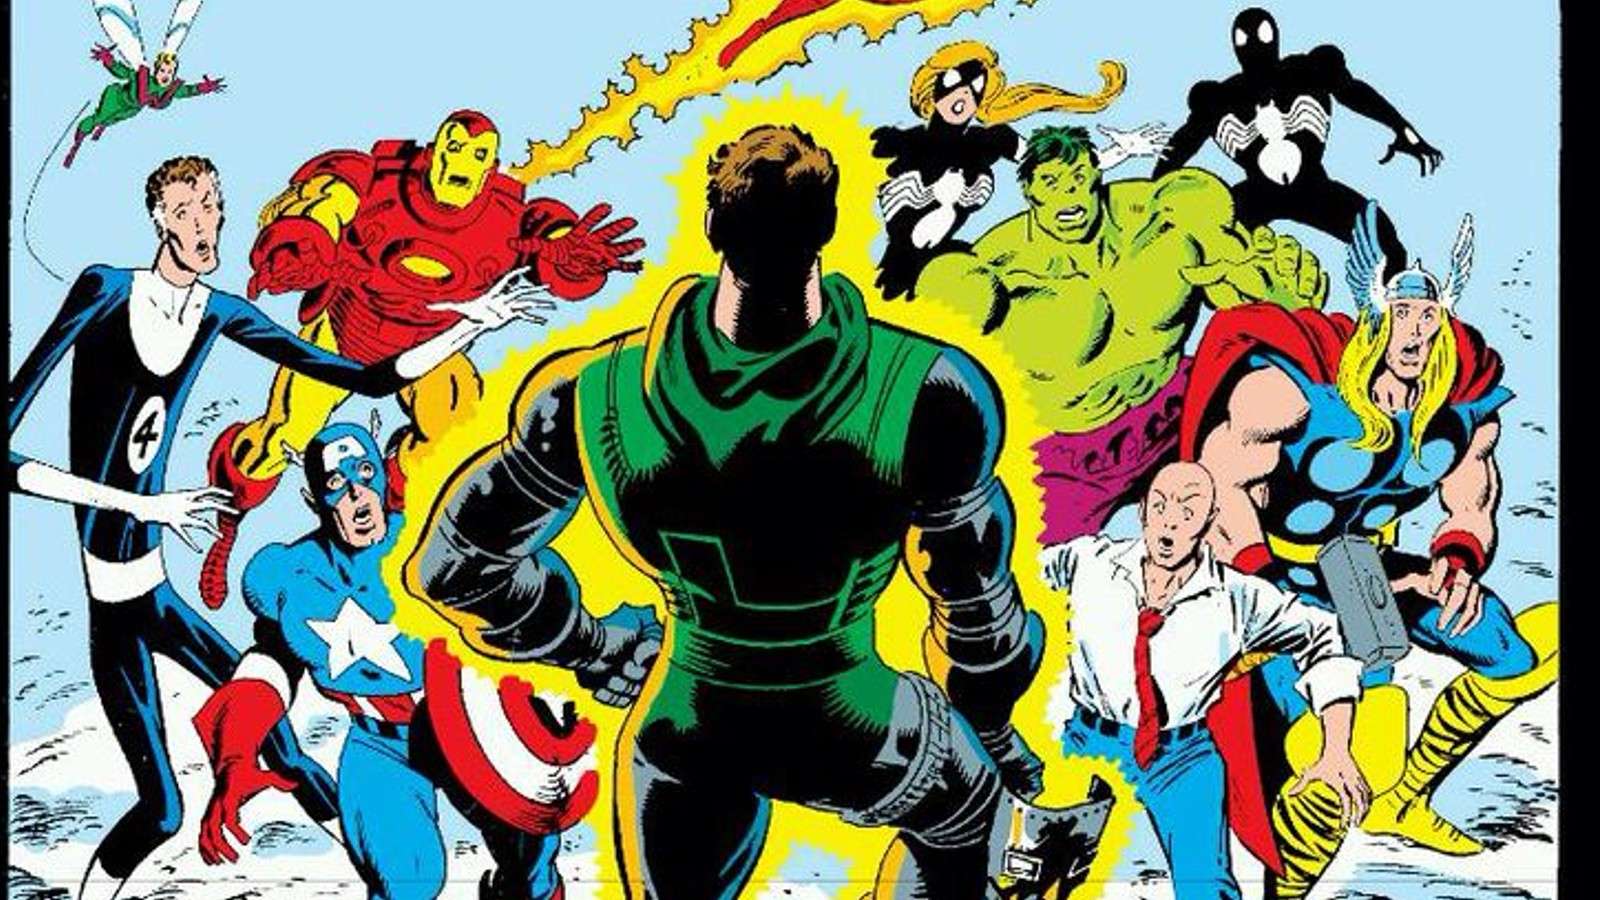 The Avengers doing Secret Wars in the comics.